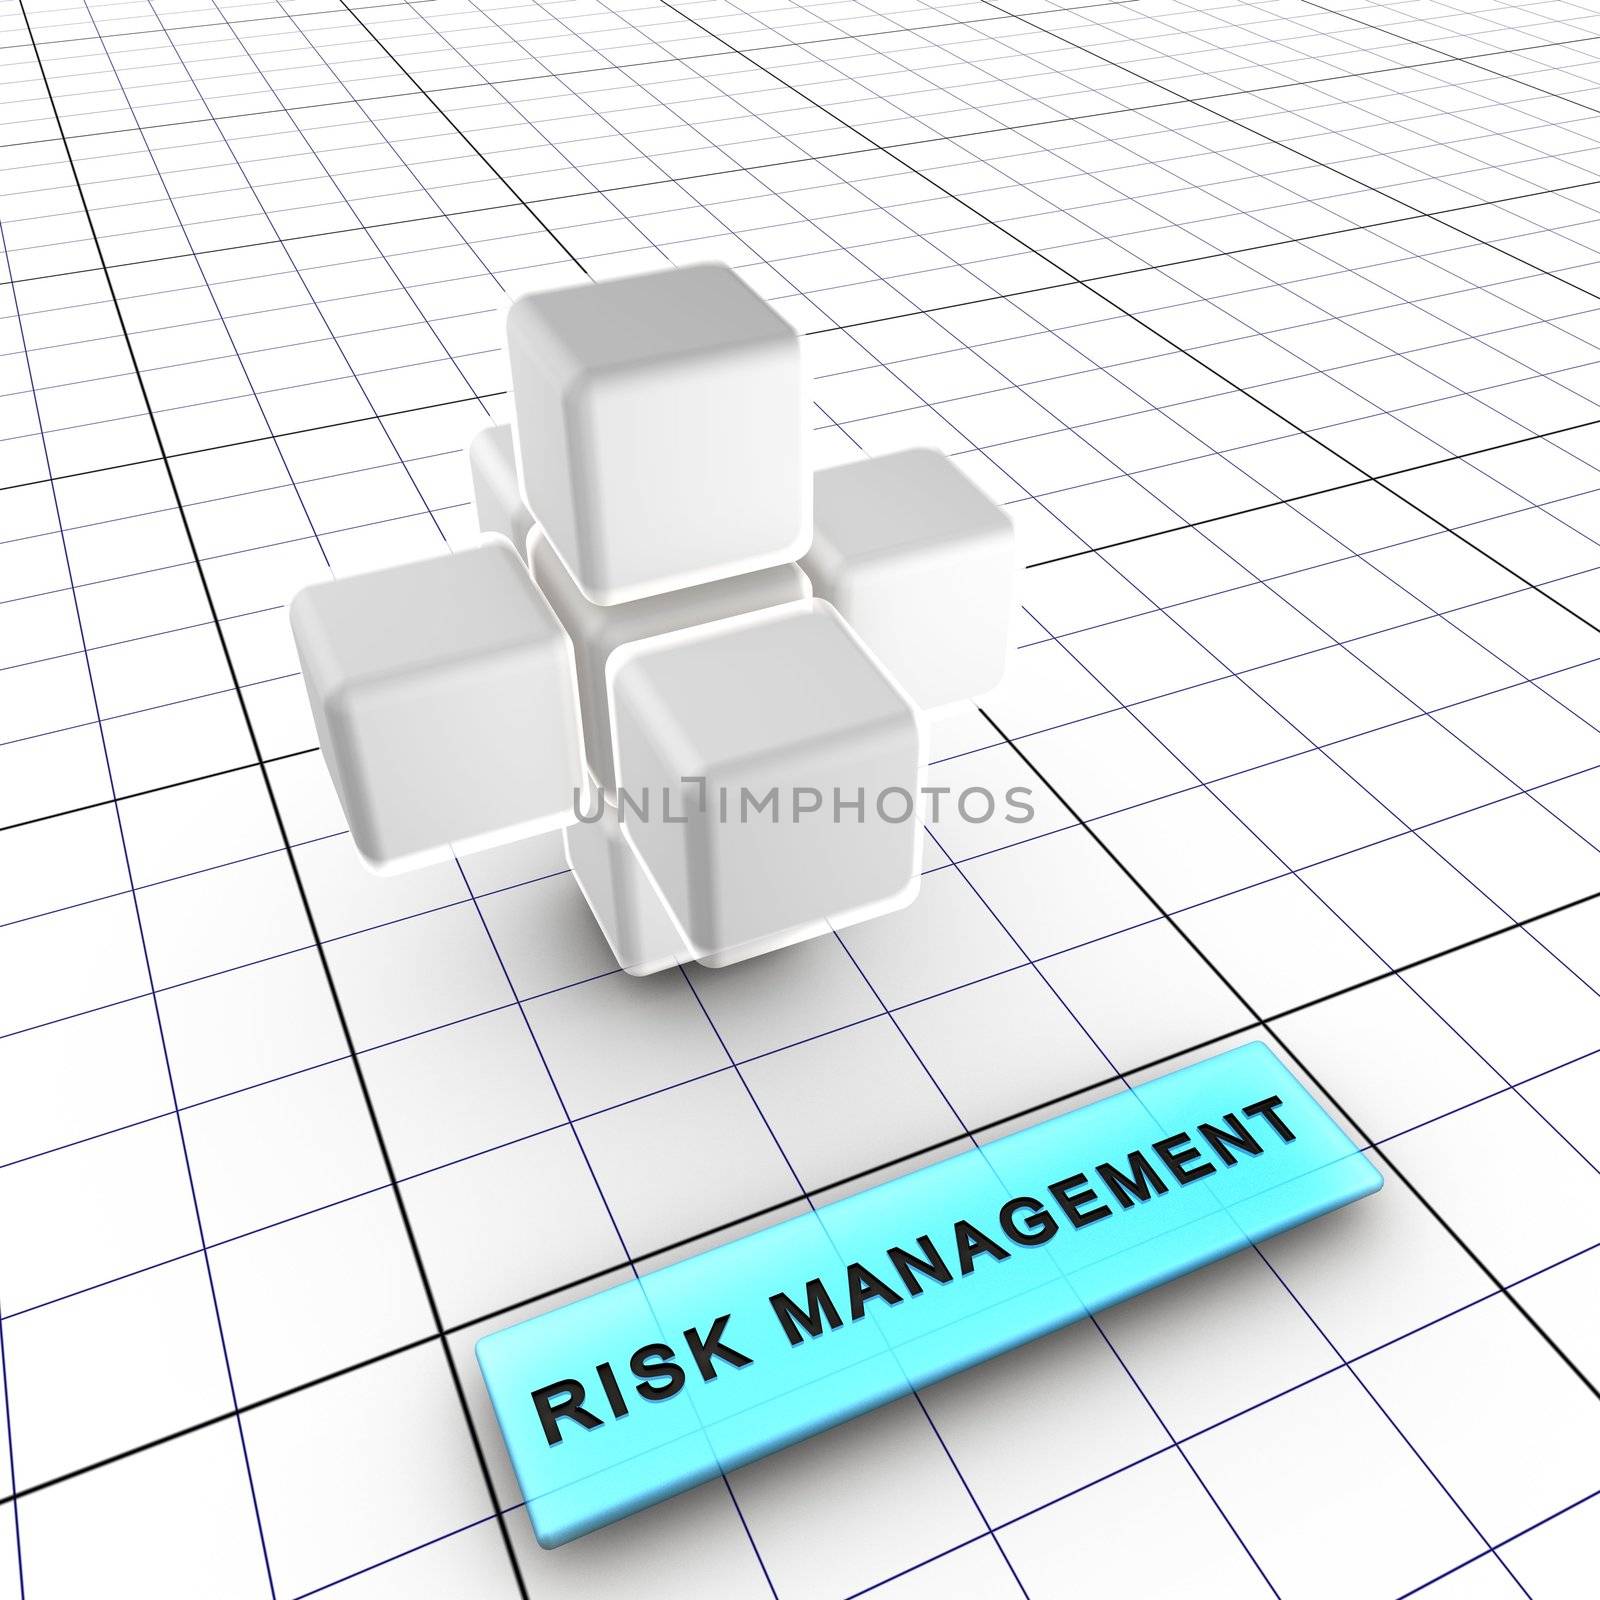 Risk management by ytjo